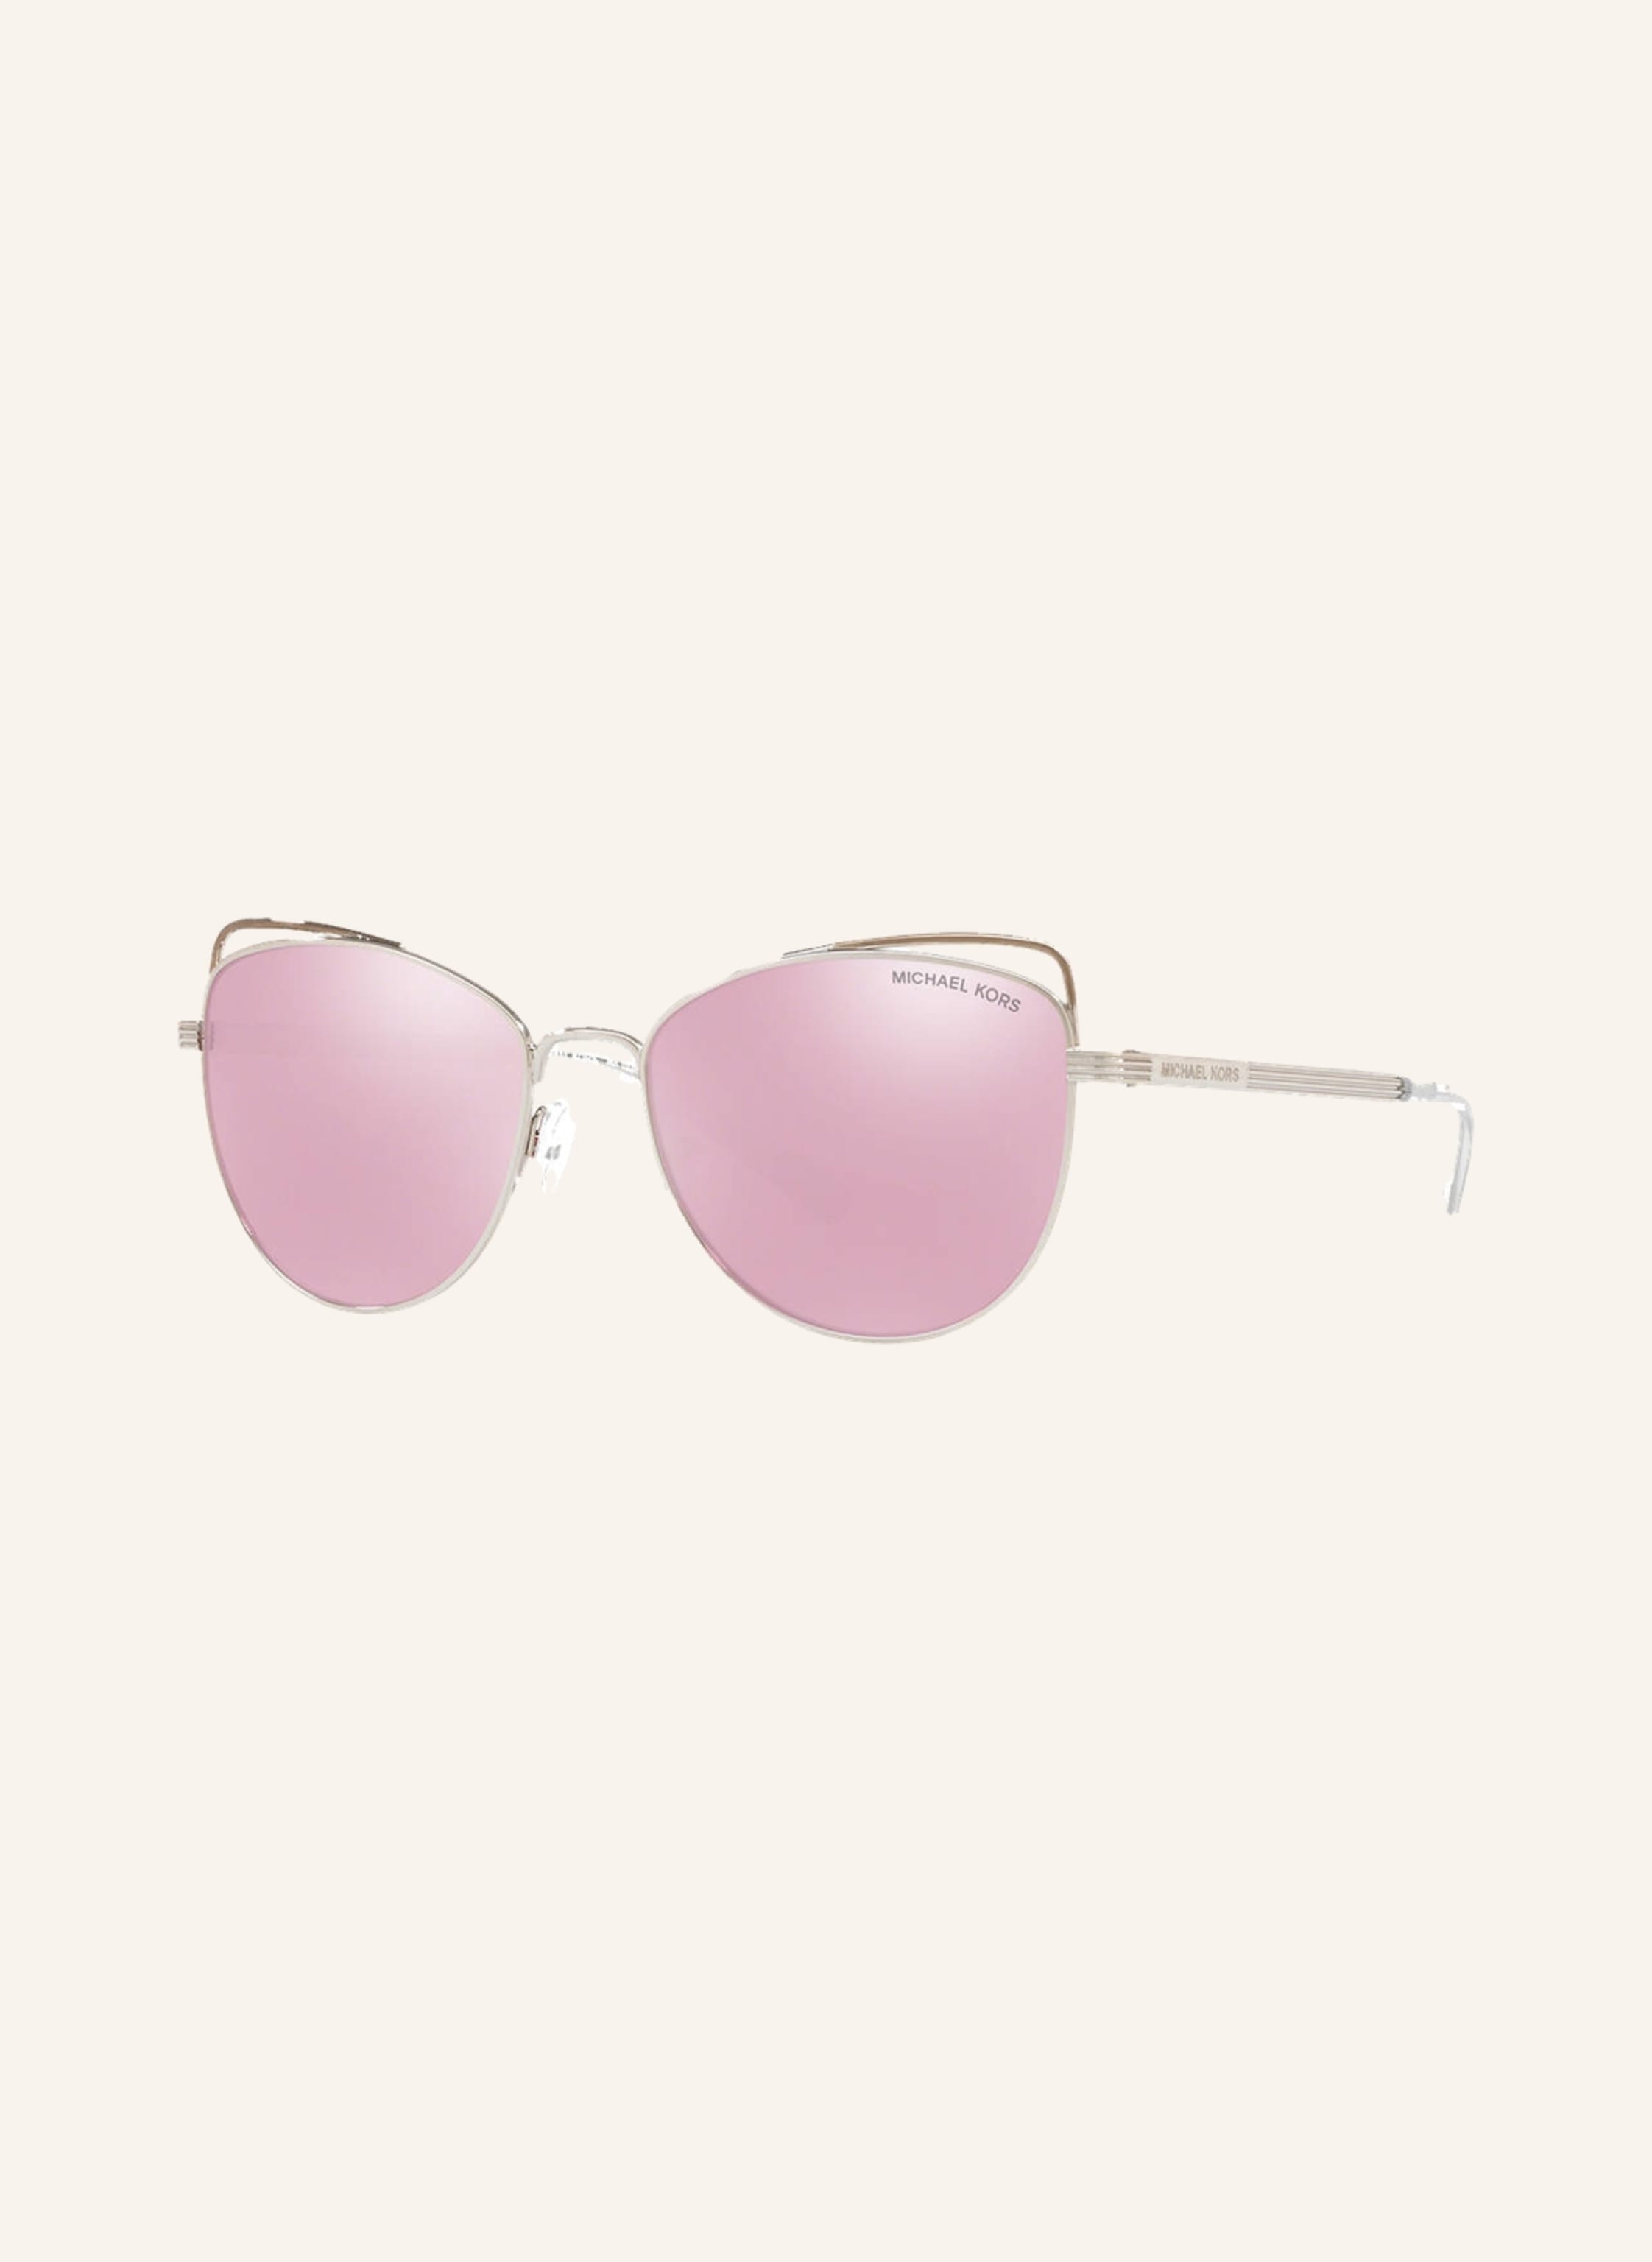 Mua Michael Kors Copenhagen MK2141 Sunglasses  335011 Pink SolidPink  Gray Gradient  55mm trên Amazon Mỹ chính hãng 2023  Giaonhan247